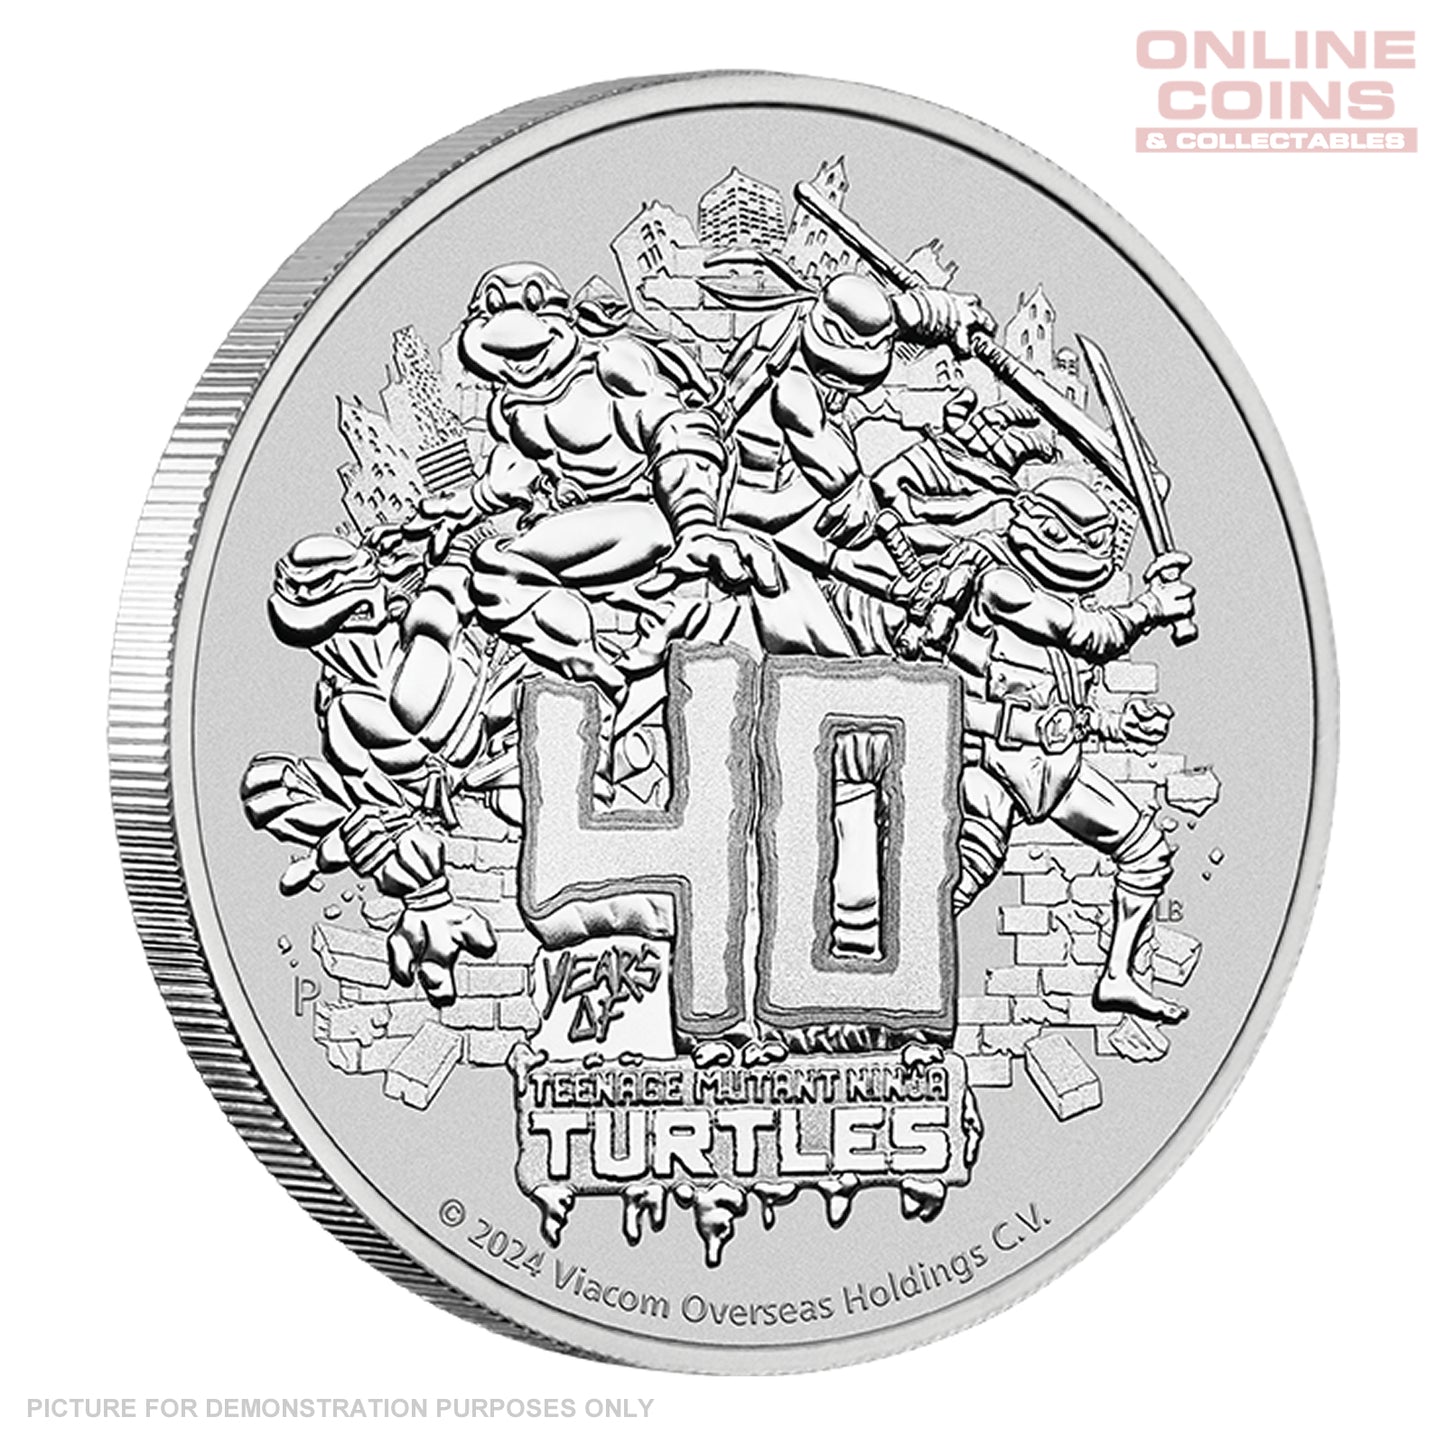 2024 Perth Mint 1oz Silver Coin in Card - 40th Anniversary Teenage Mutant Ninja Turtles